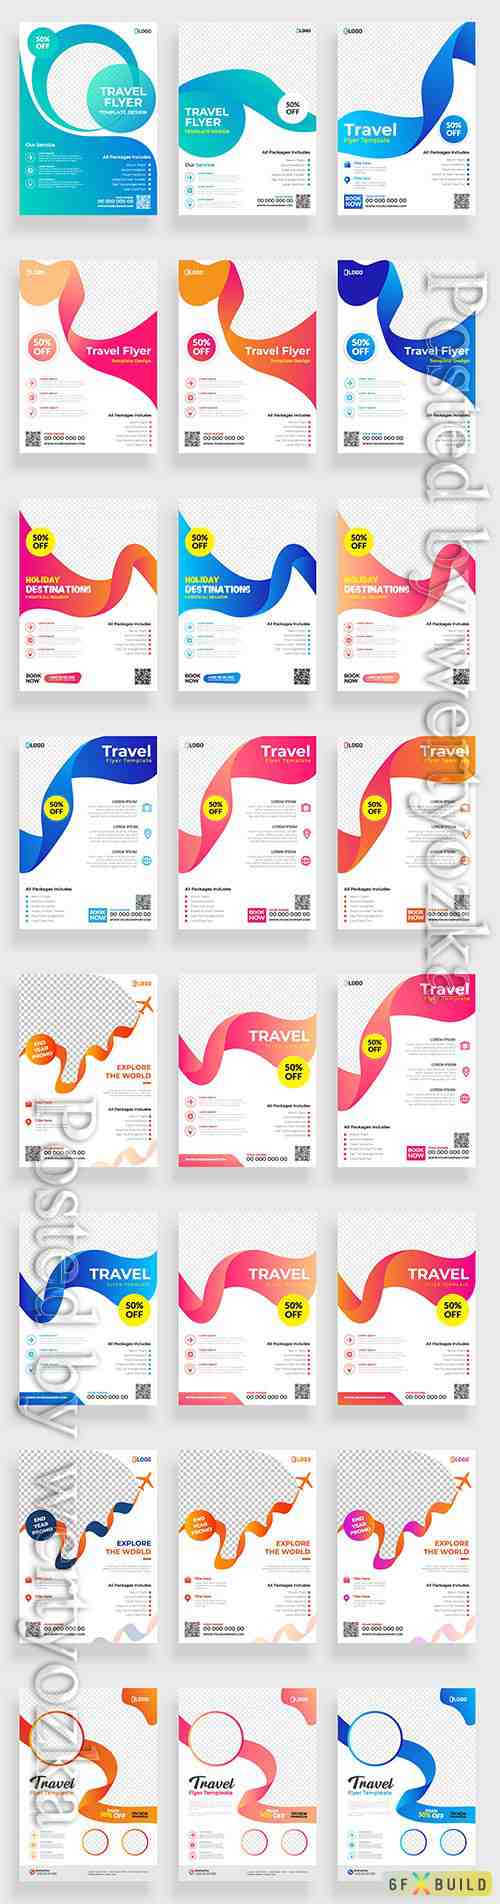 Business flyer template design, brochure vector illustration # 10